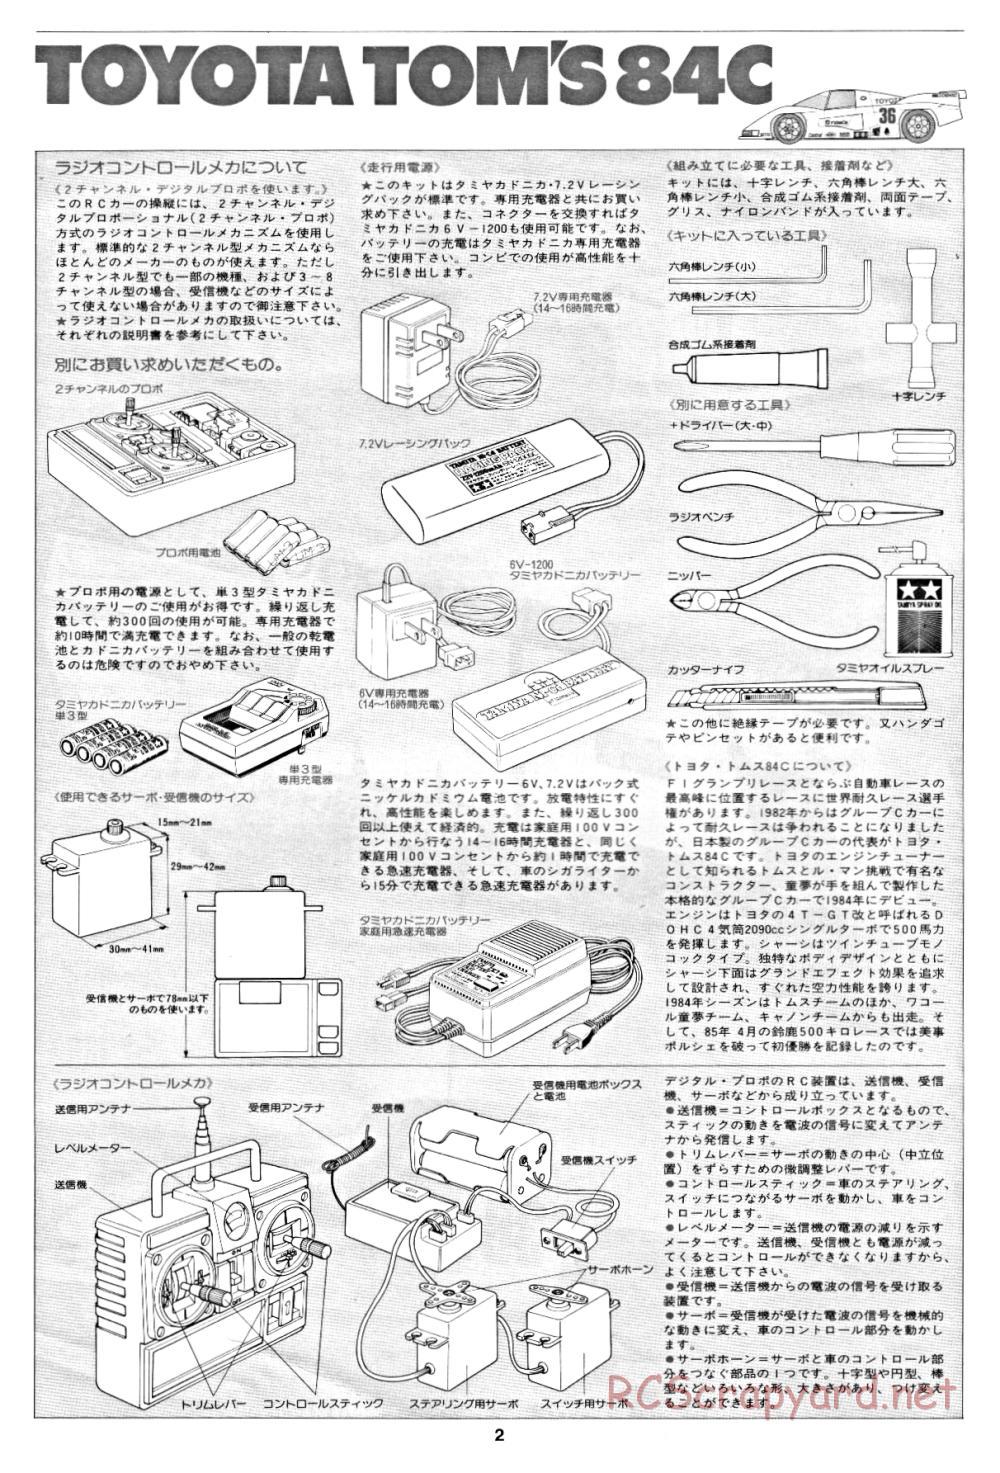 Tamiya - Toyota Tom's 84C - RM MK.6 - 58049 - Manual - Page 2